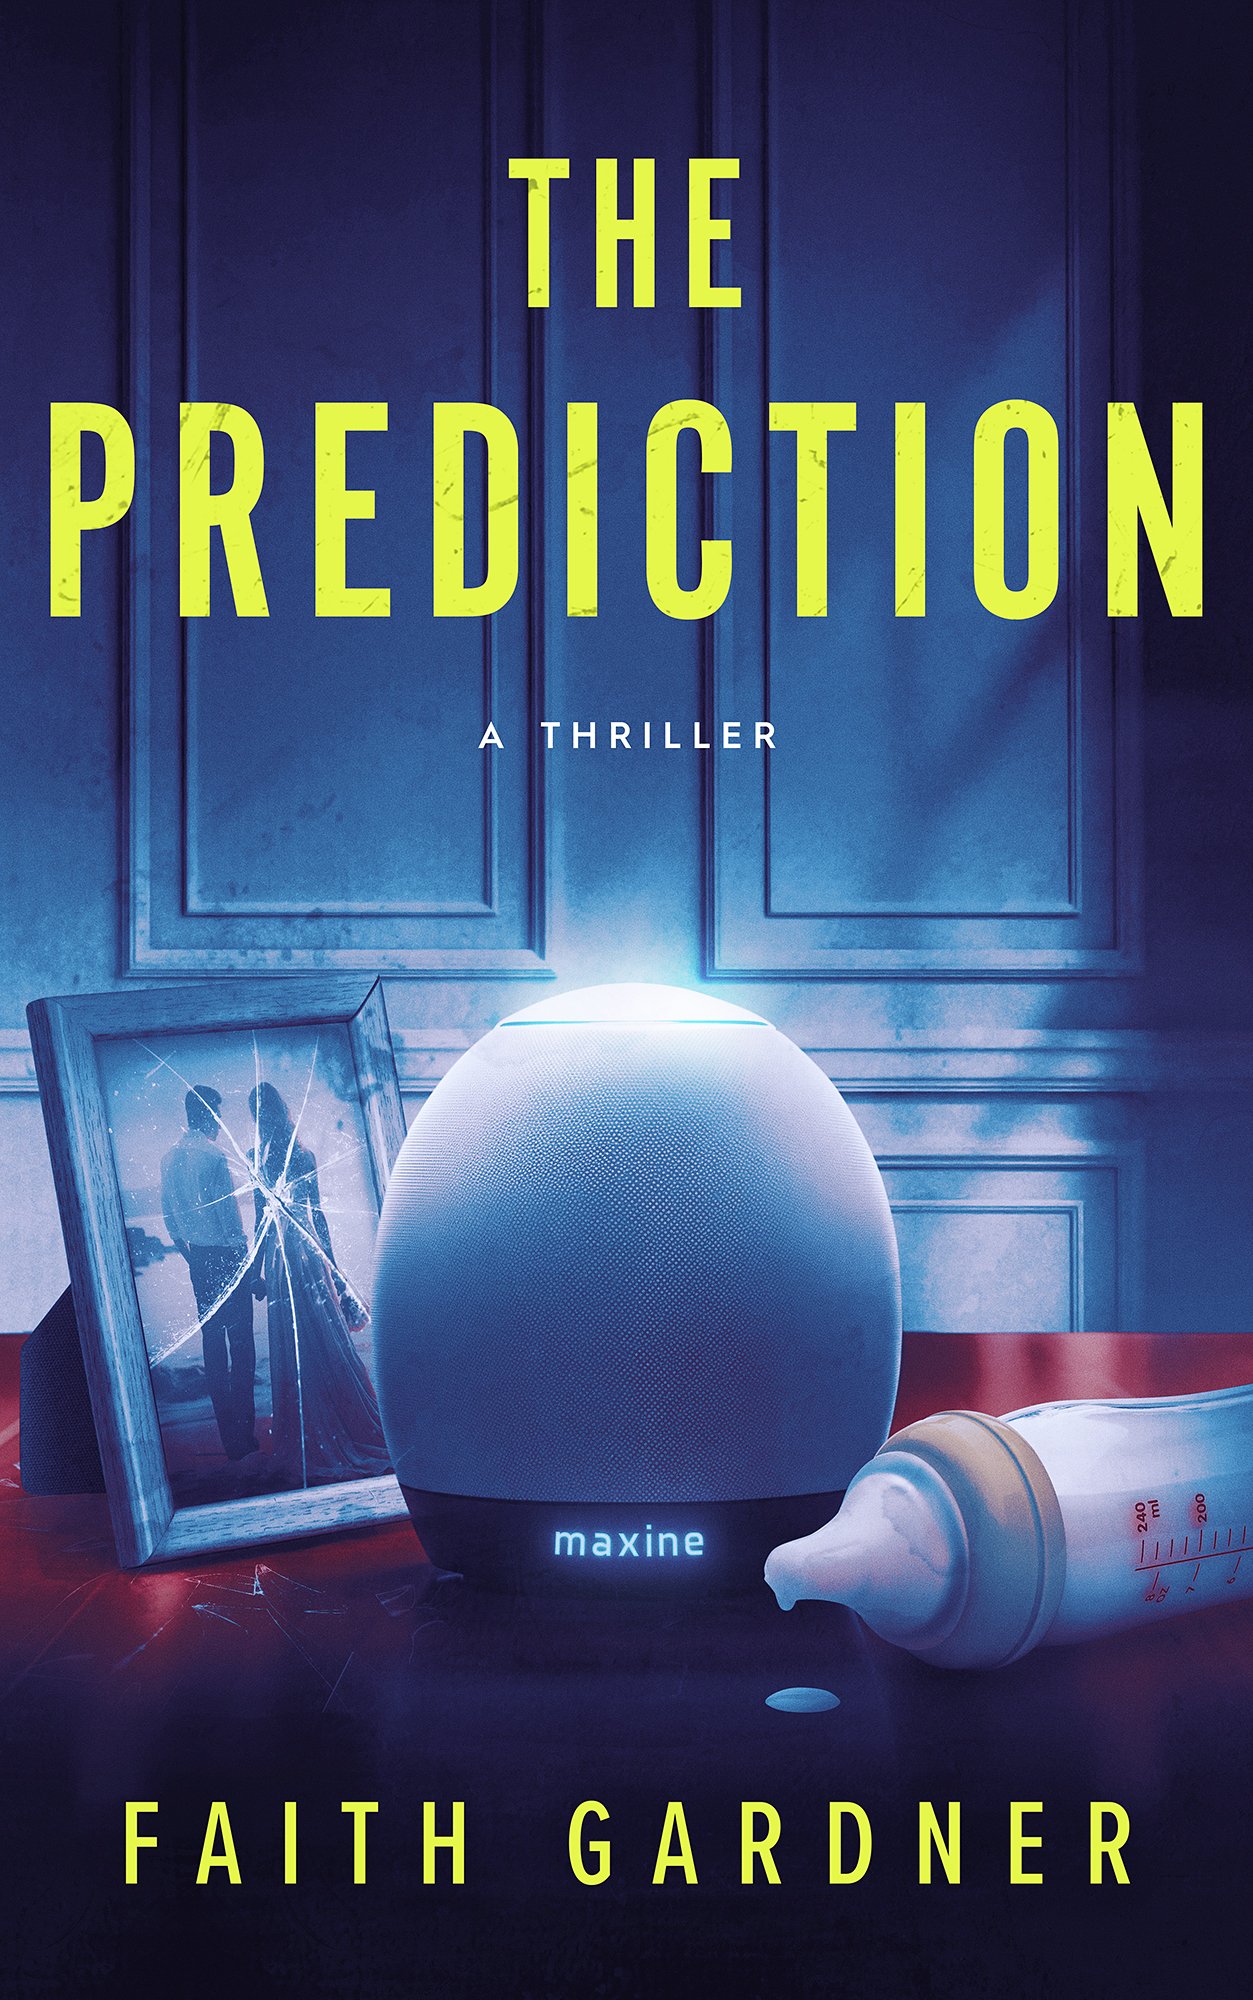 The Prediction - Ebook Small.jpg